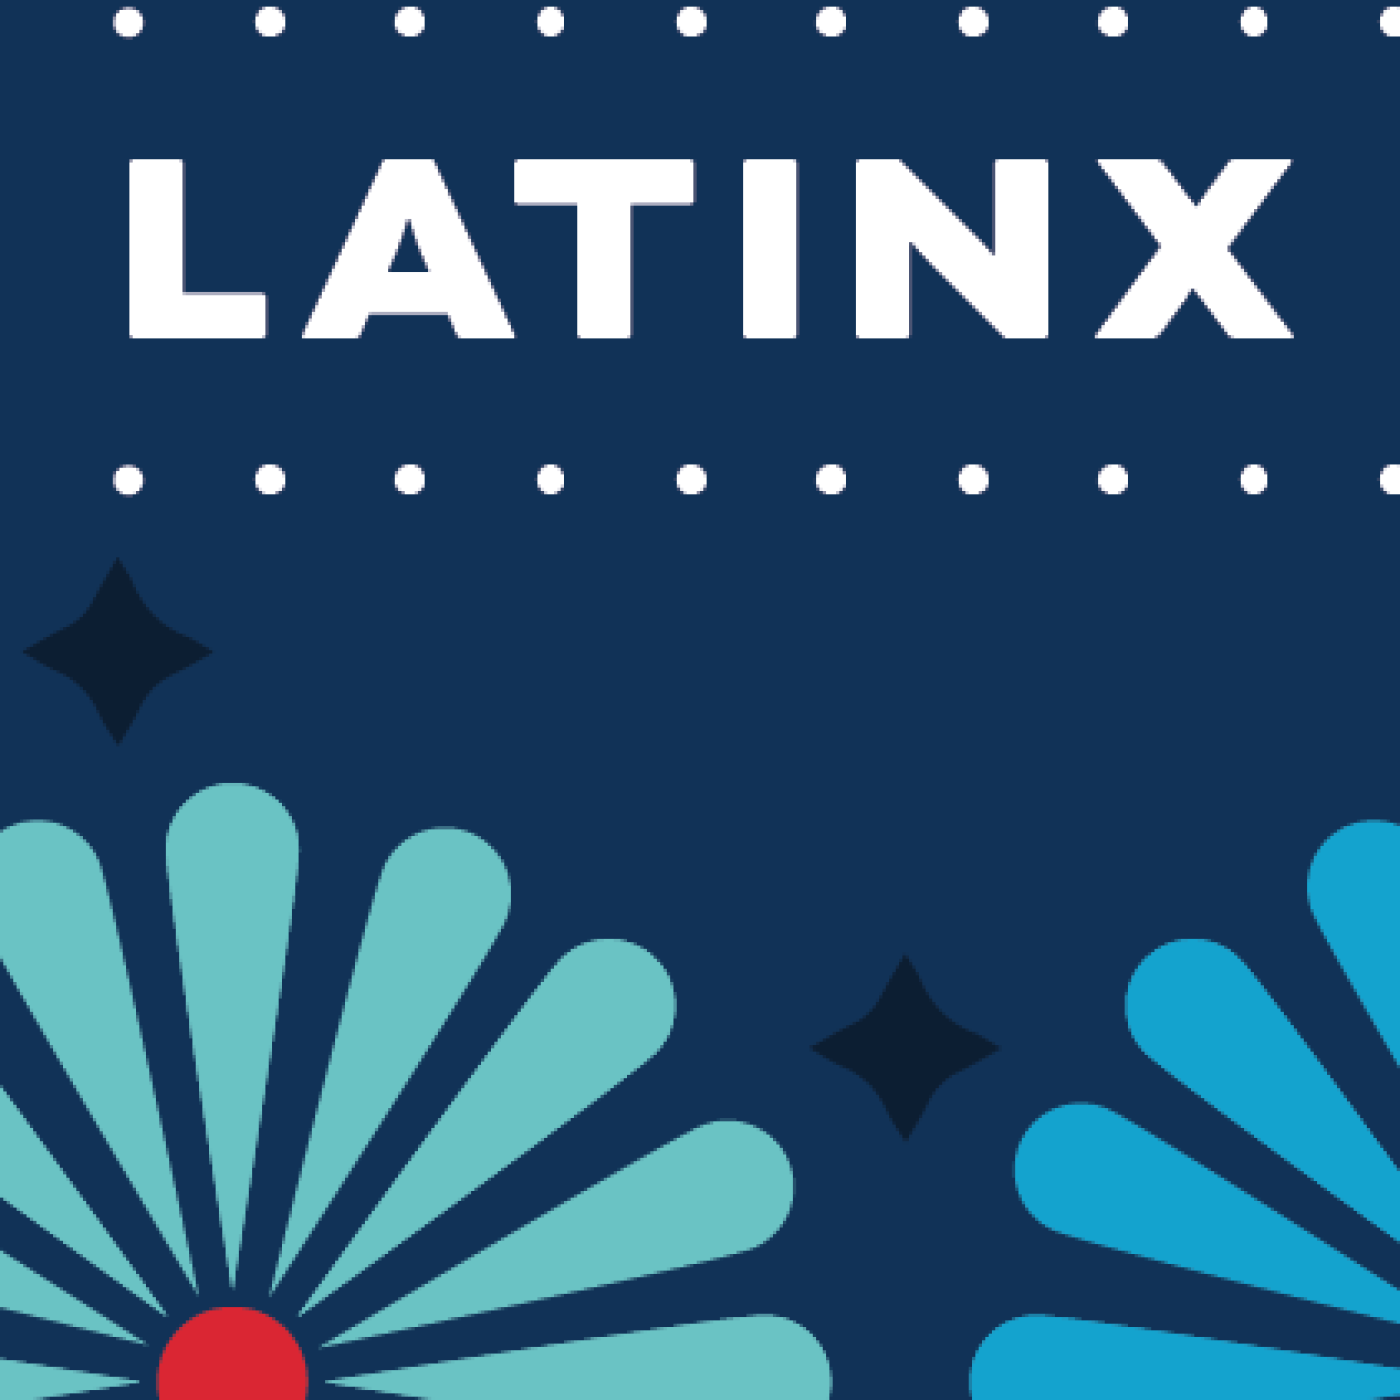 Graphic for Celebrating Latinx Heritage Month